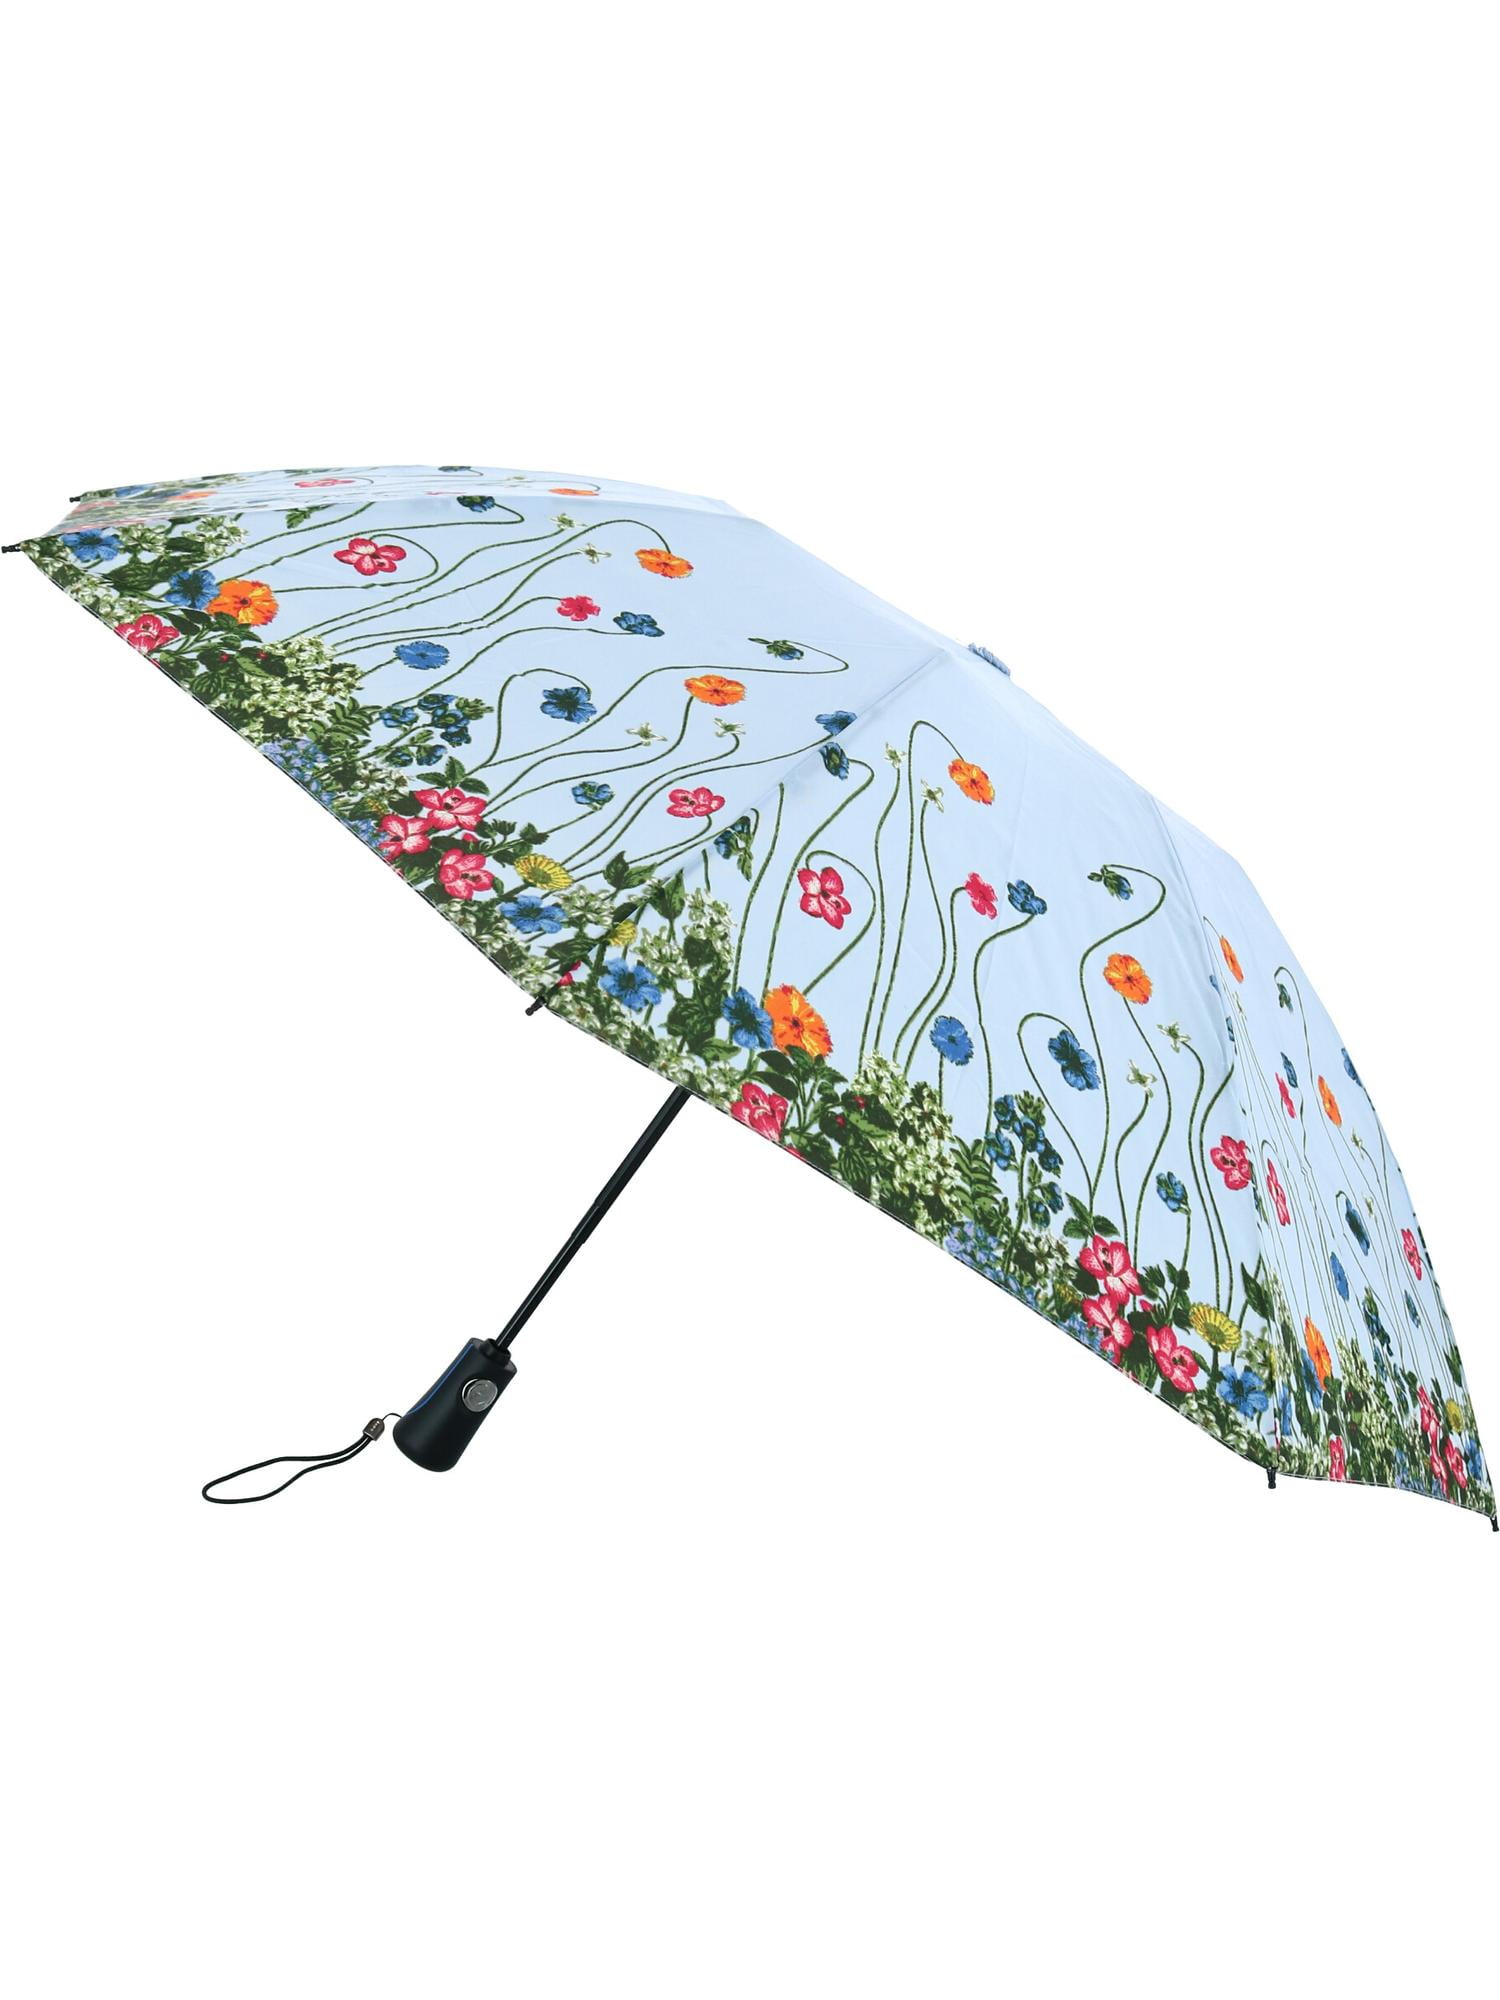 3 Section totes Supermini Photographic Floral Print Umbrella 